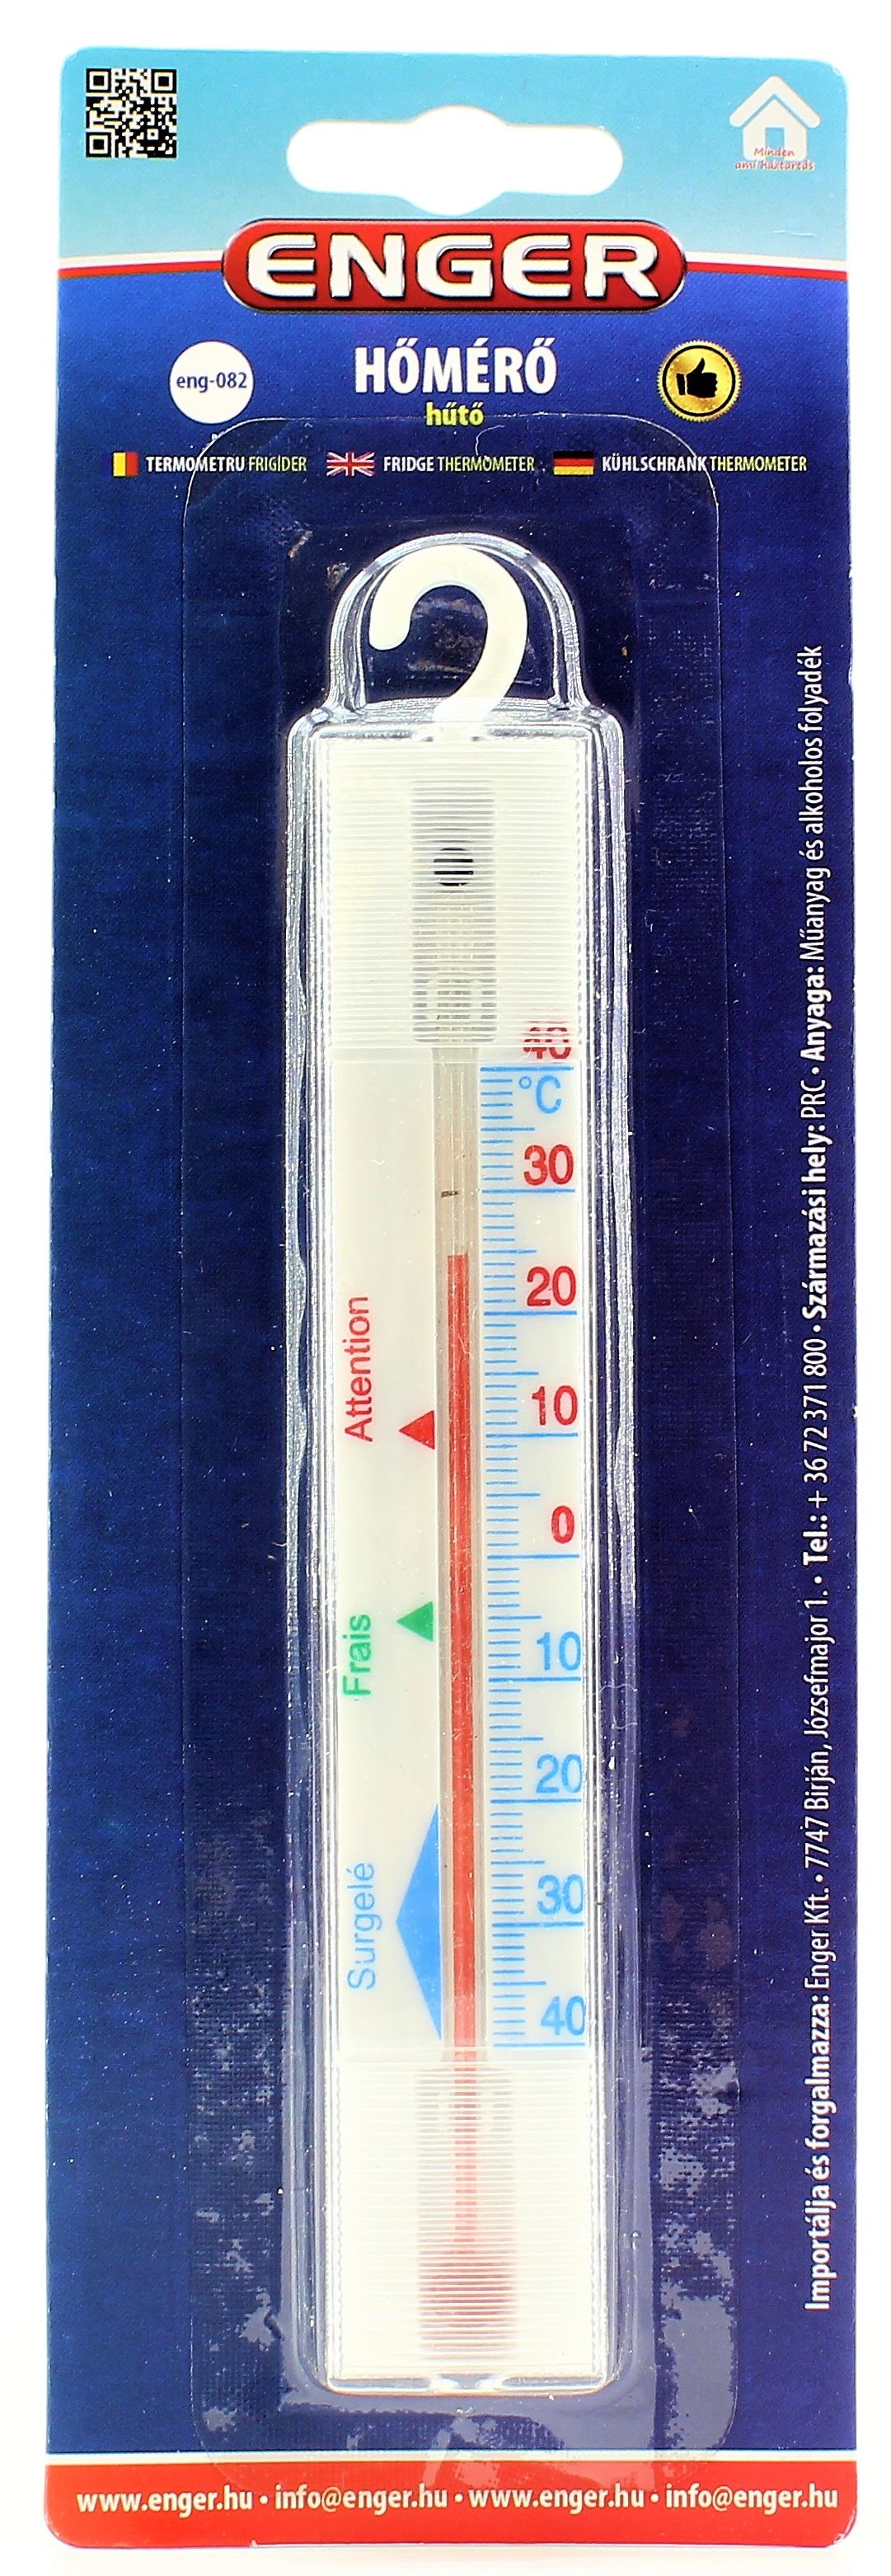 Teploměr chladničkový 14x2,5 cm závěsný eng-082